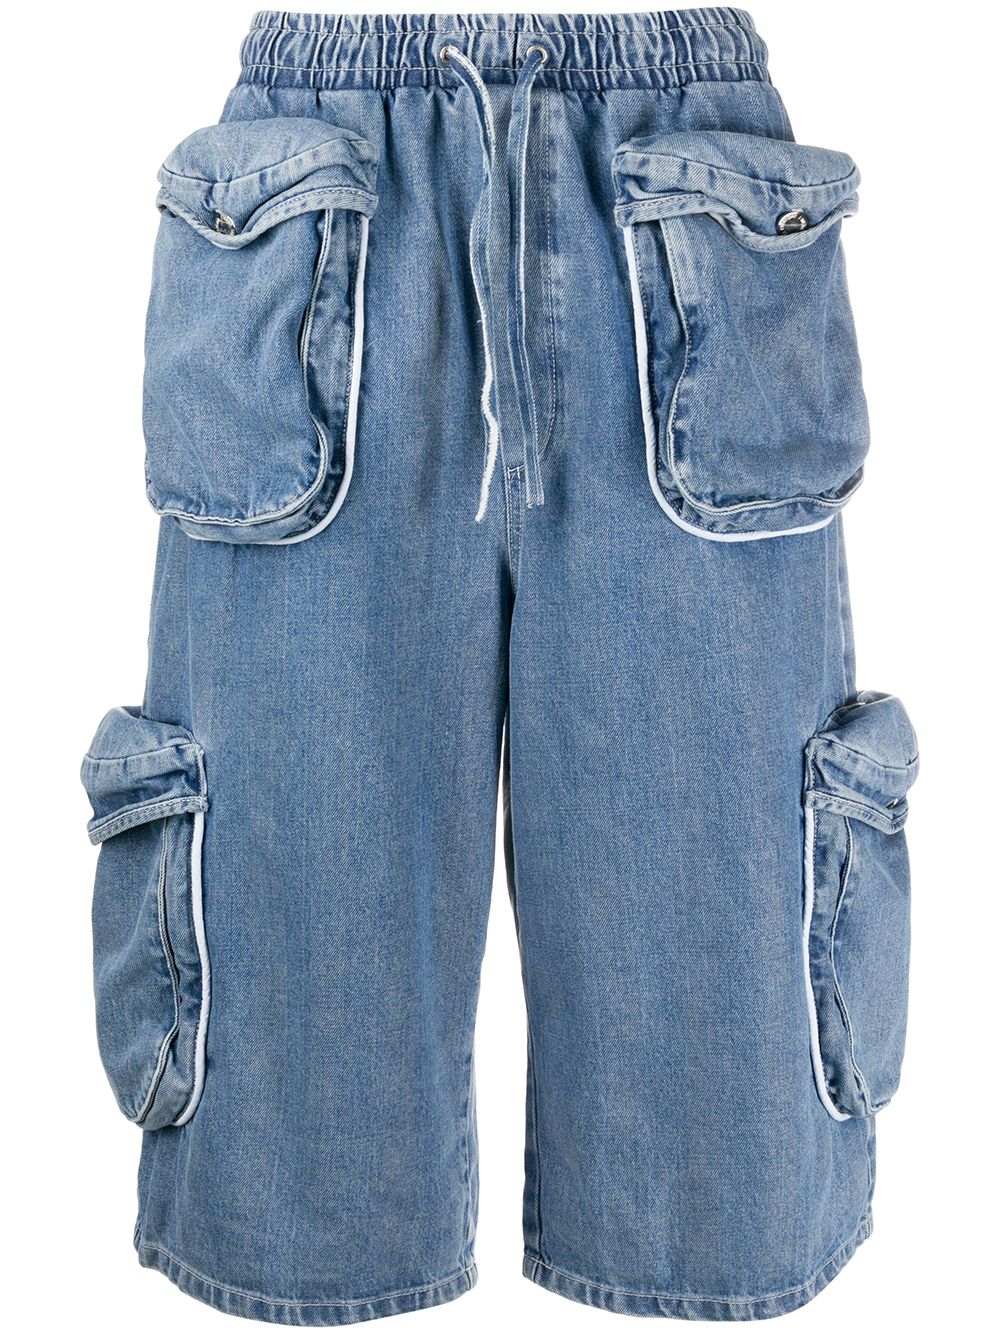 blue jean cargo shorts